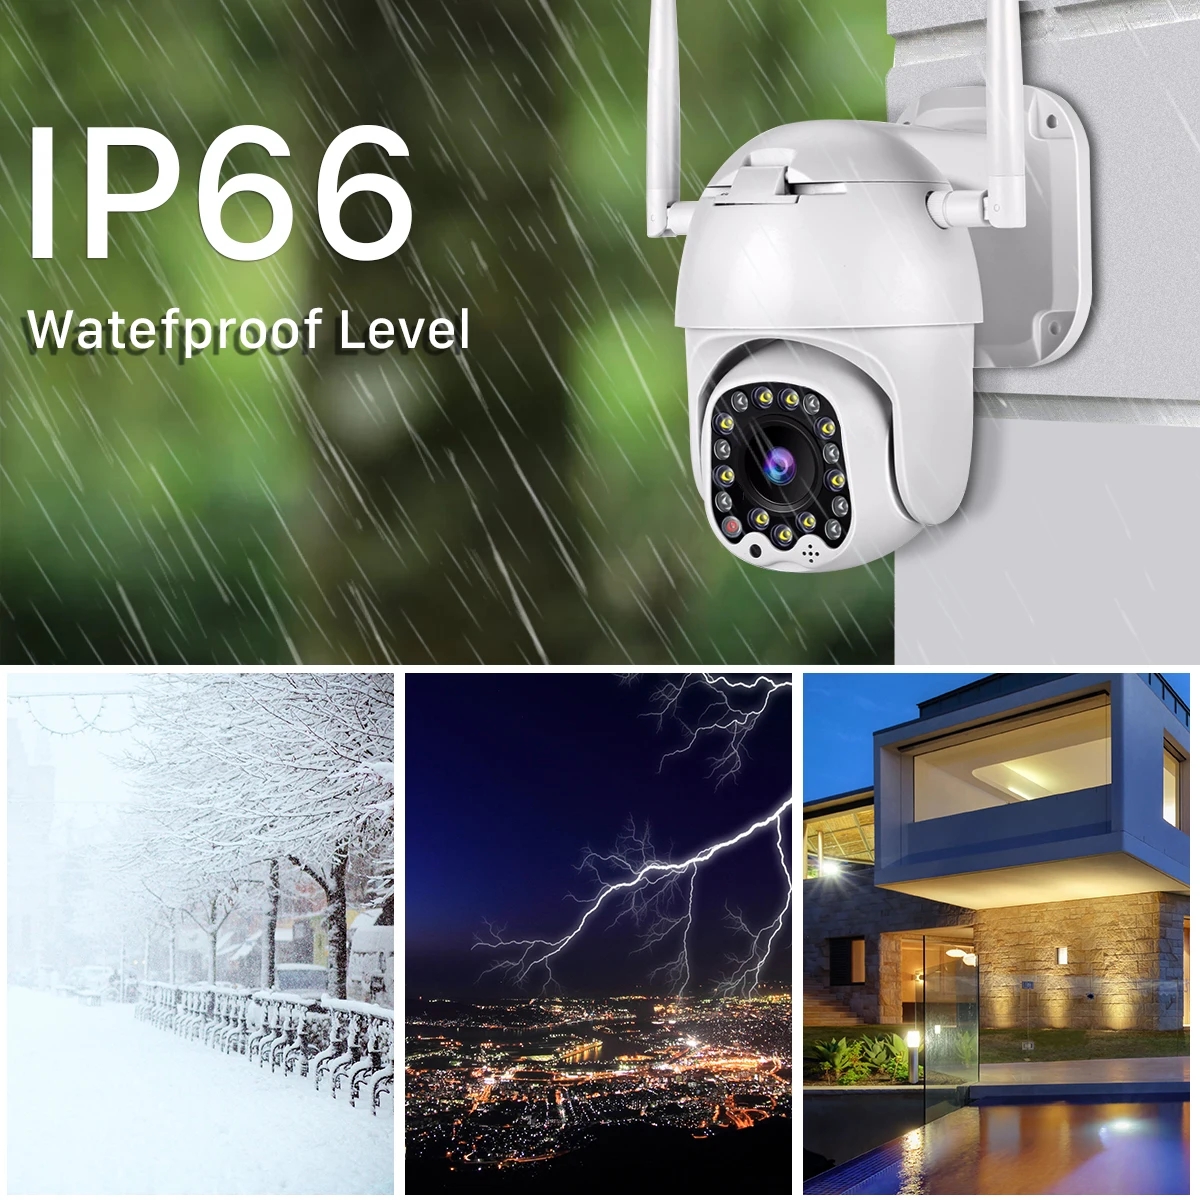 BESDERSEC сирена 1080p Wifi PTZ камера наружная домашняя камера безопасности Pan Tilt 4X Zoom онлайн CCTV Беспроводная IP камера YCC365